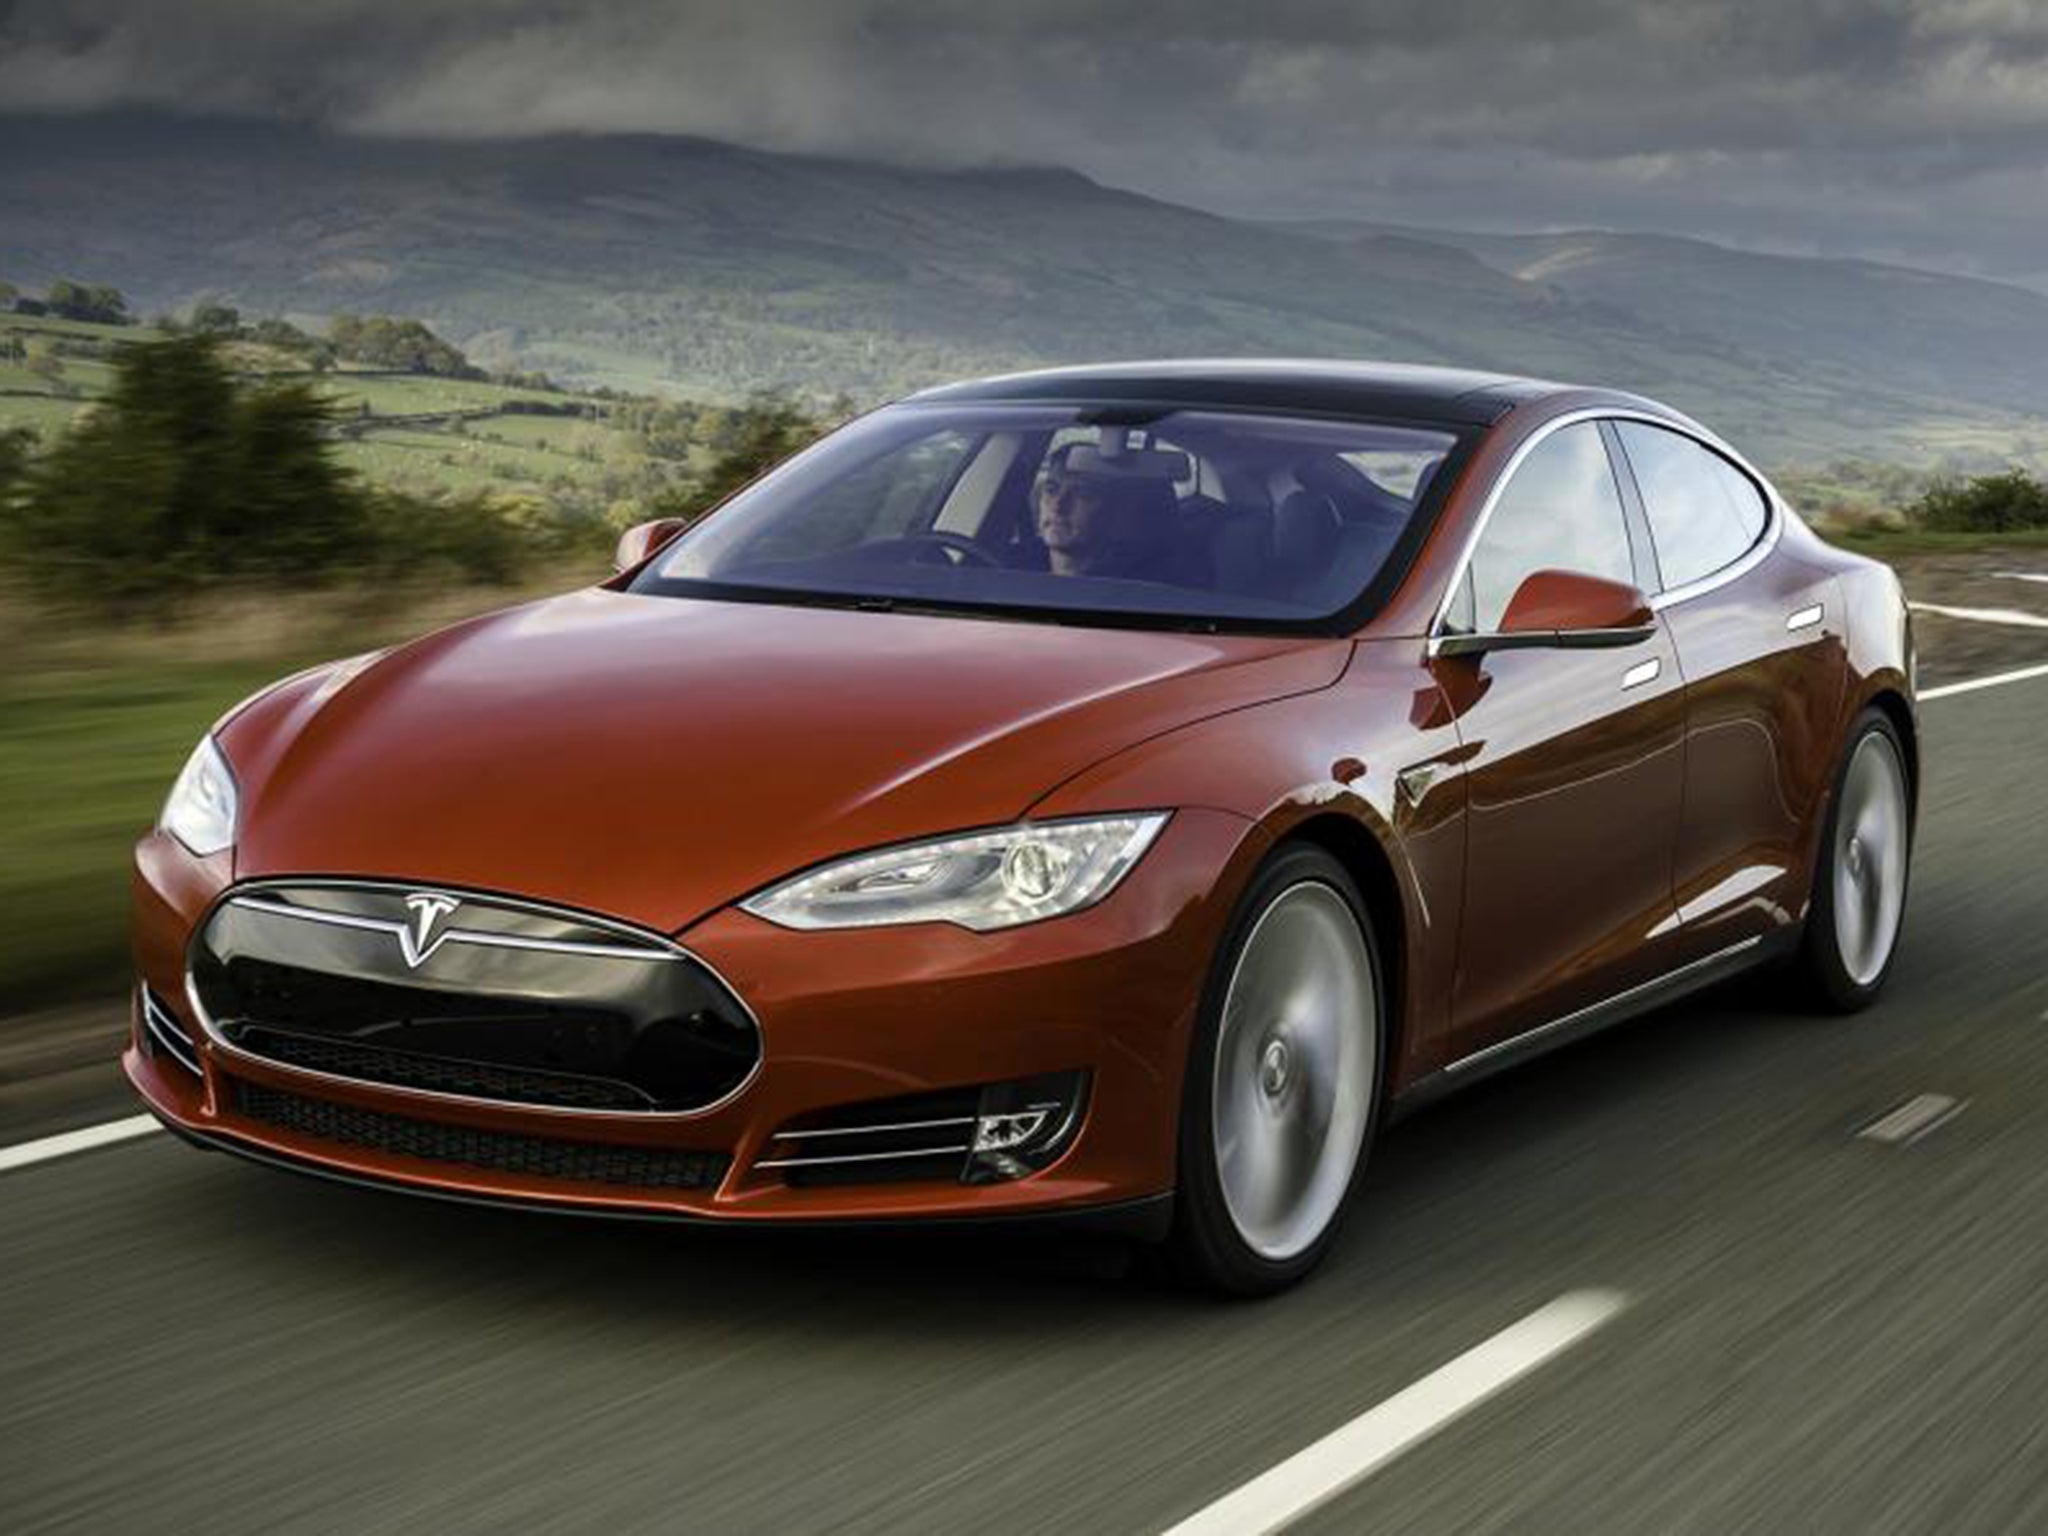 Tesla Model S 70d Car Review Latest Incarnation Brings